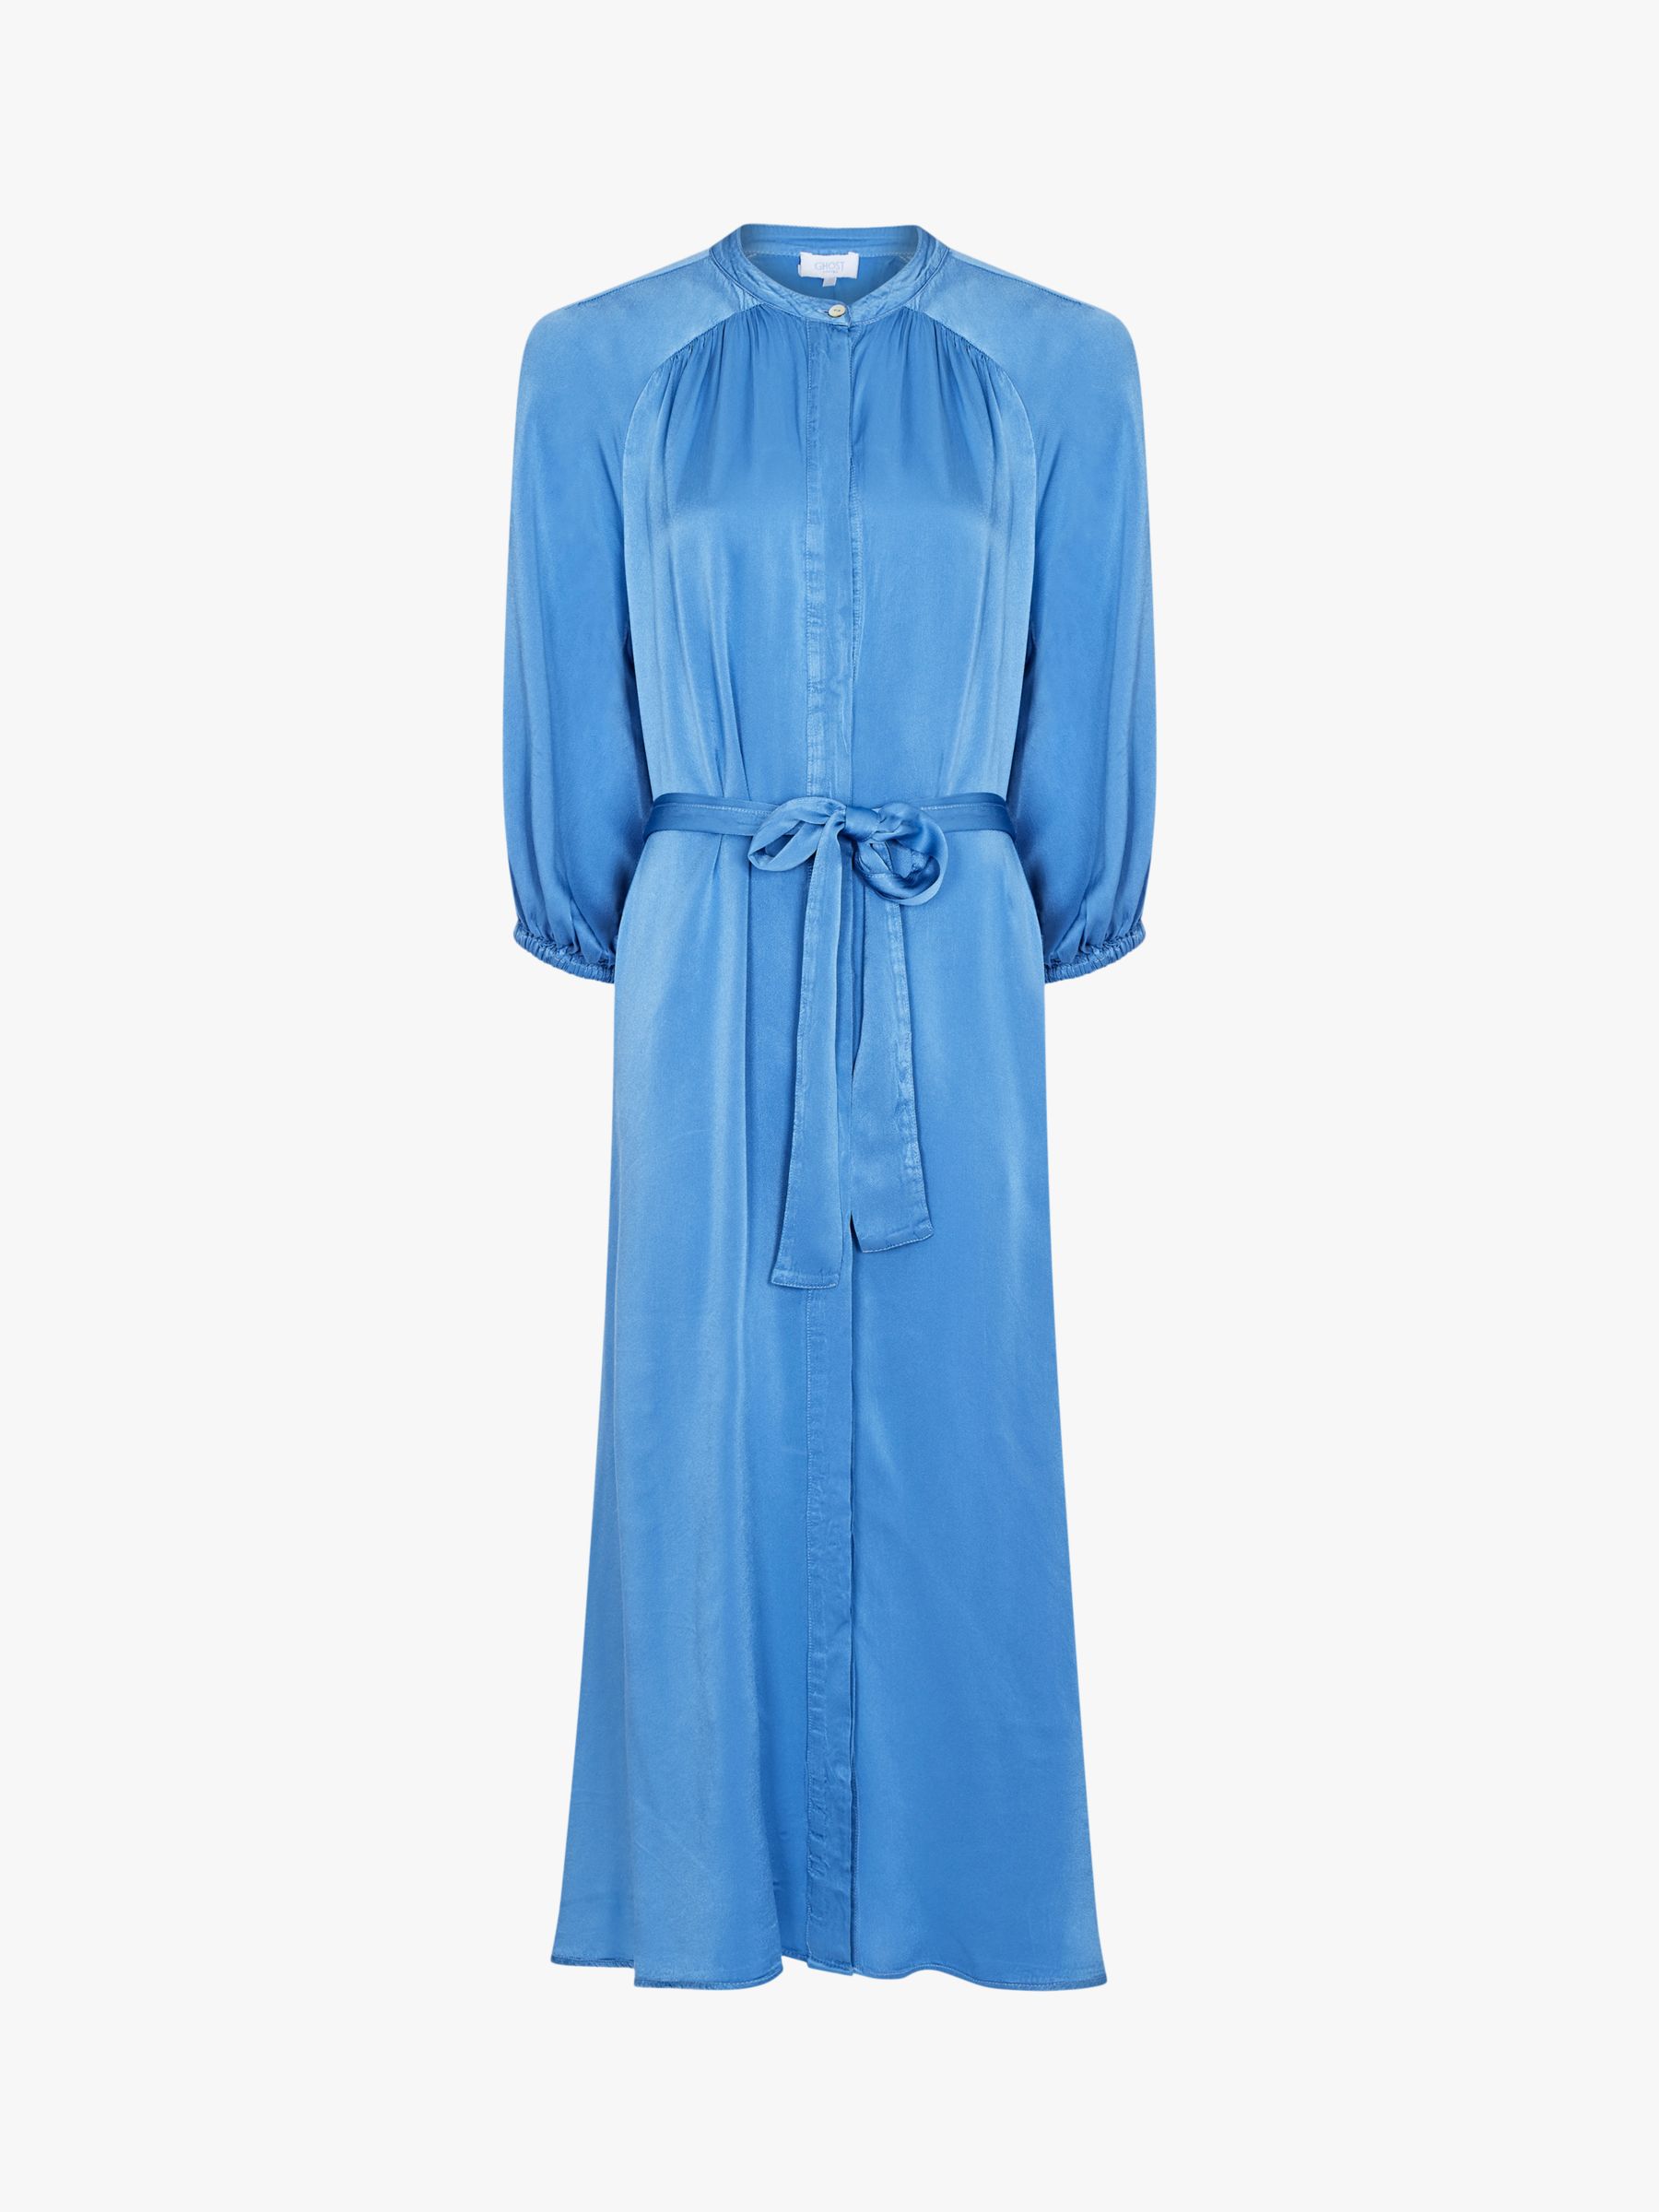 Ghost Sienna Dress, Blue